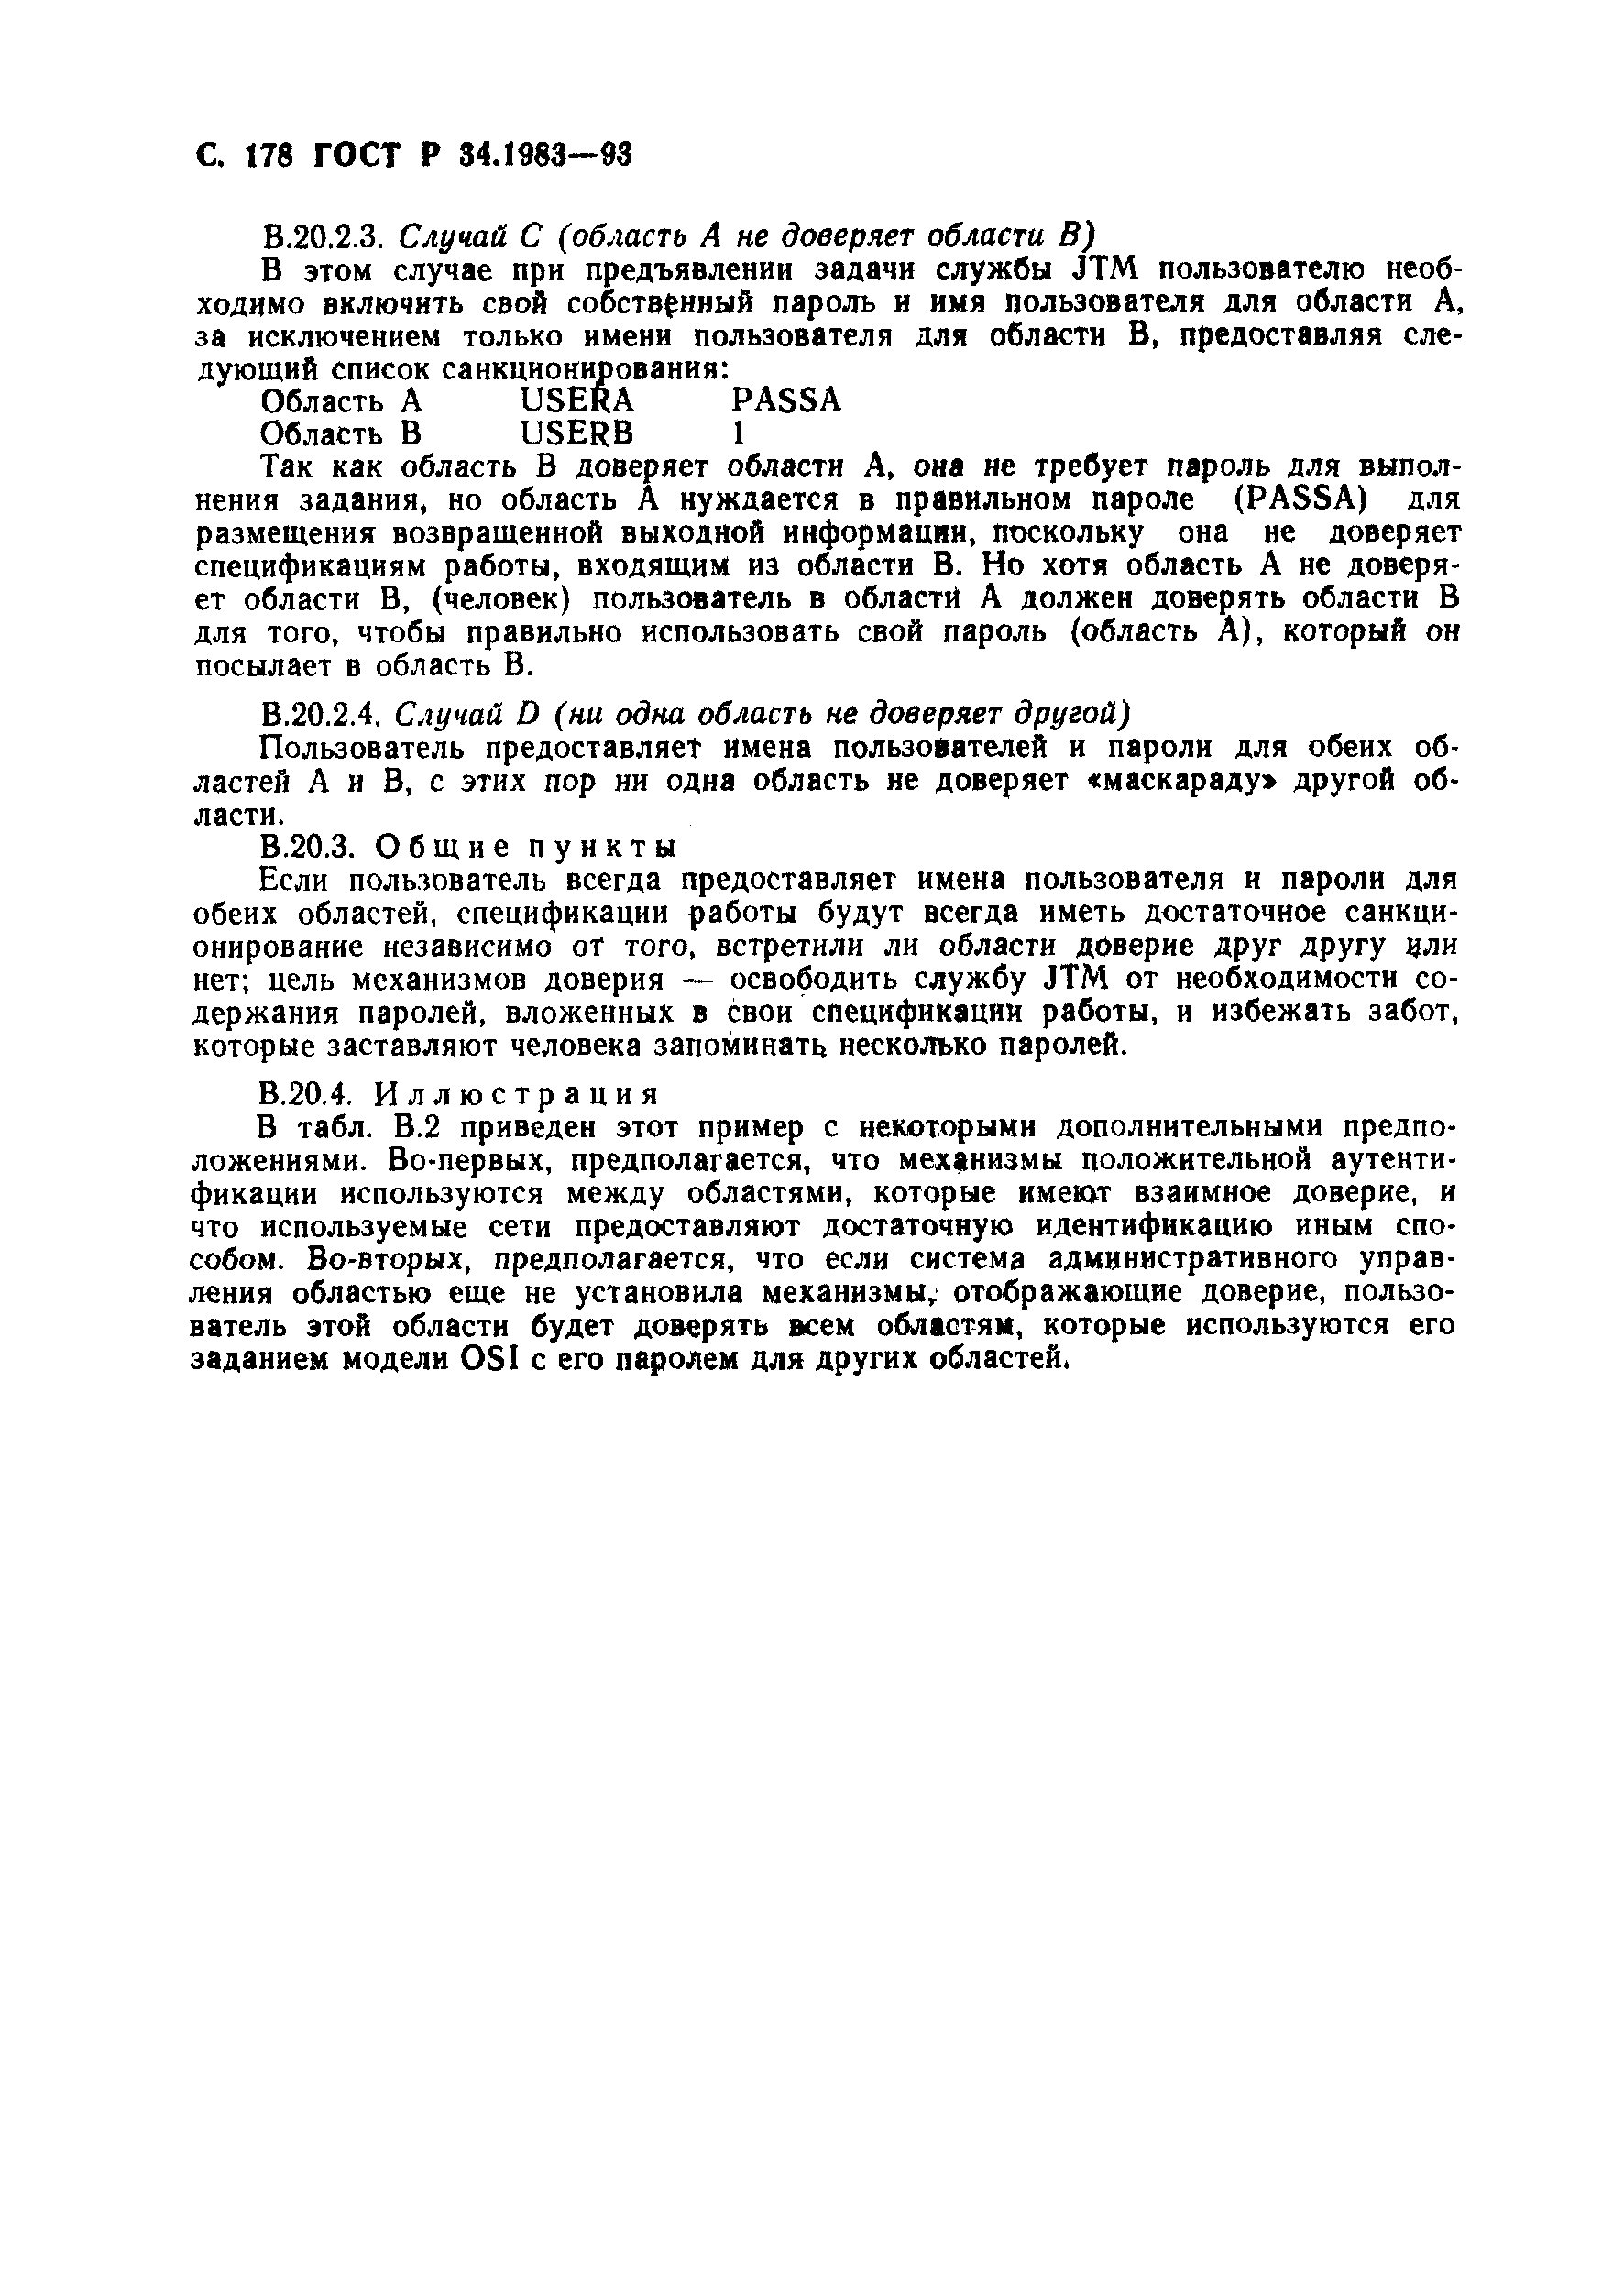 ГОСТ Р 34.1983-93. Страница 179